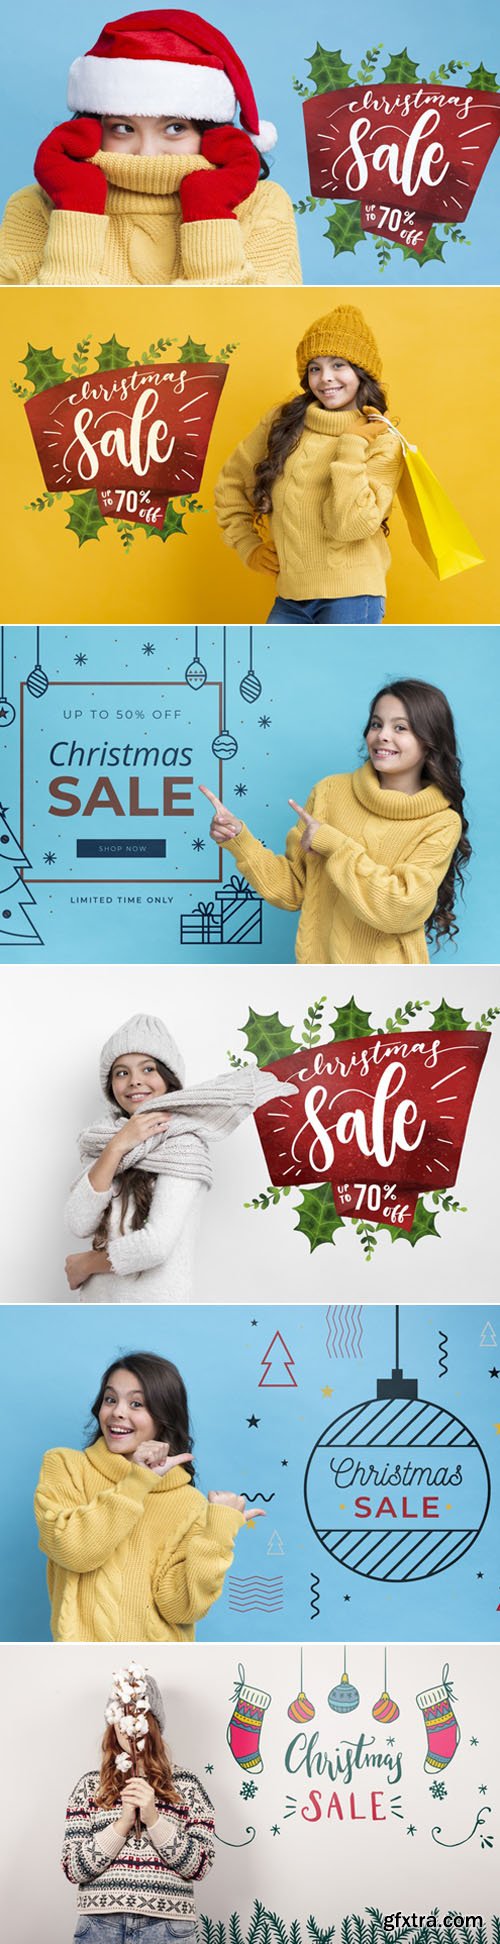 Holiday Sales PSD Mockups Templates 2